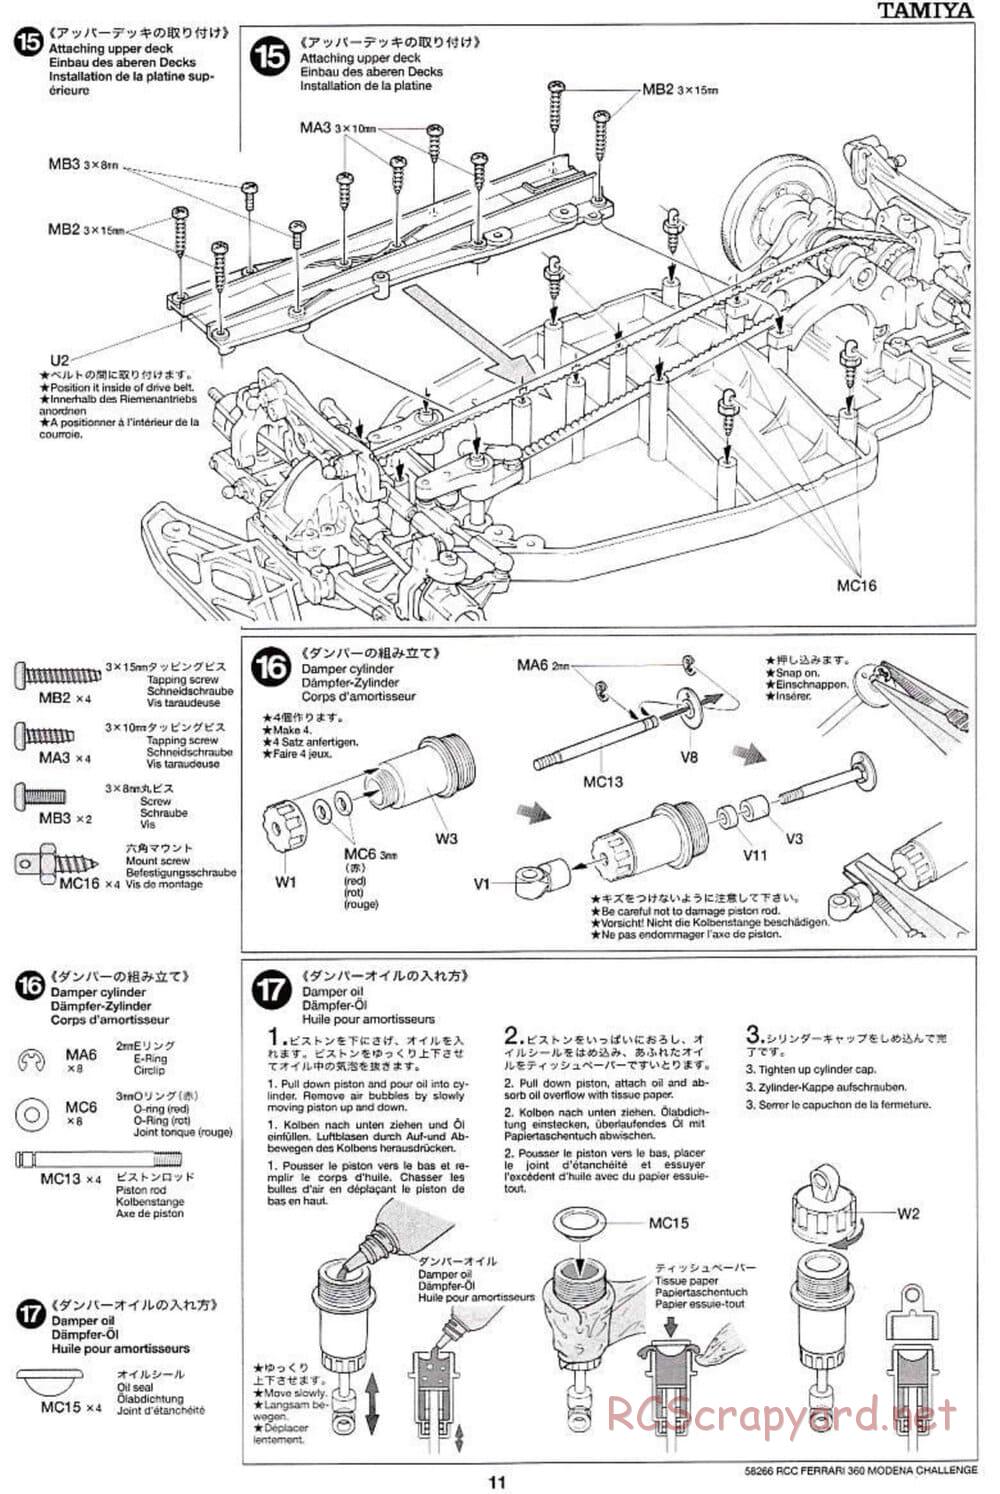 Tamiya - Ferrari 360 Modena Challenge - TA-04 Chassis - Manual - Page 11